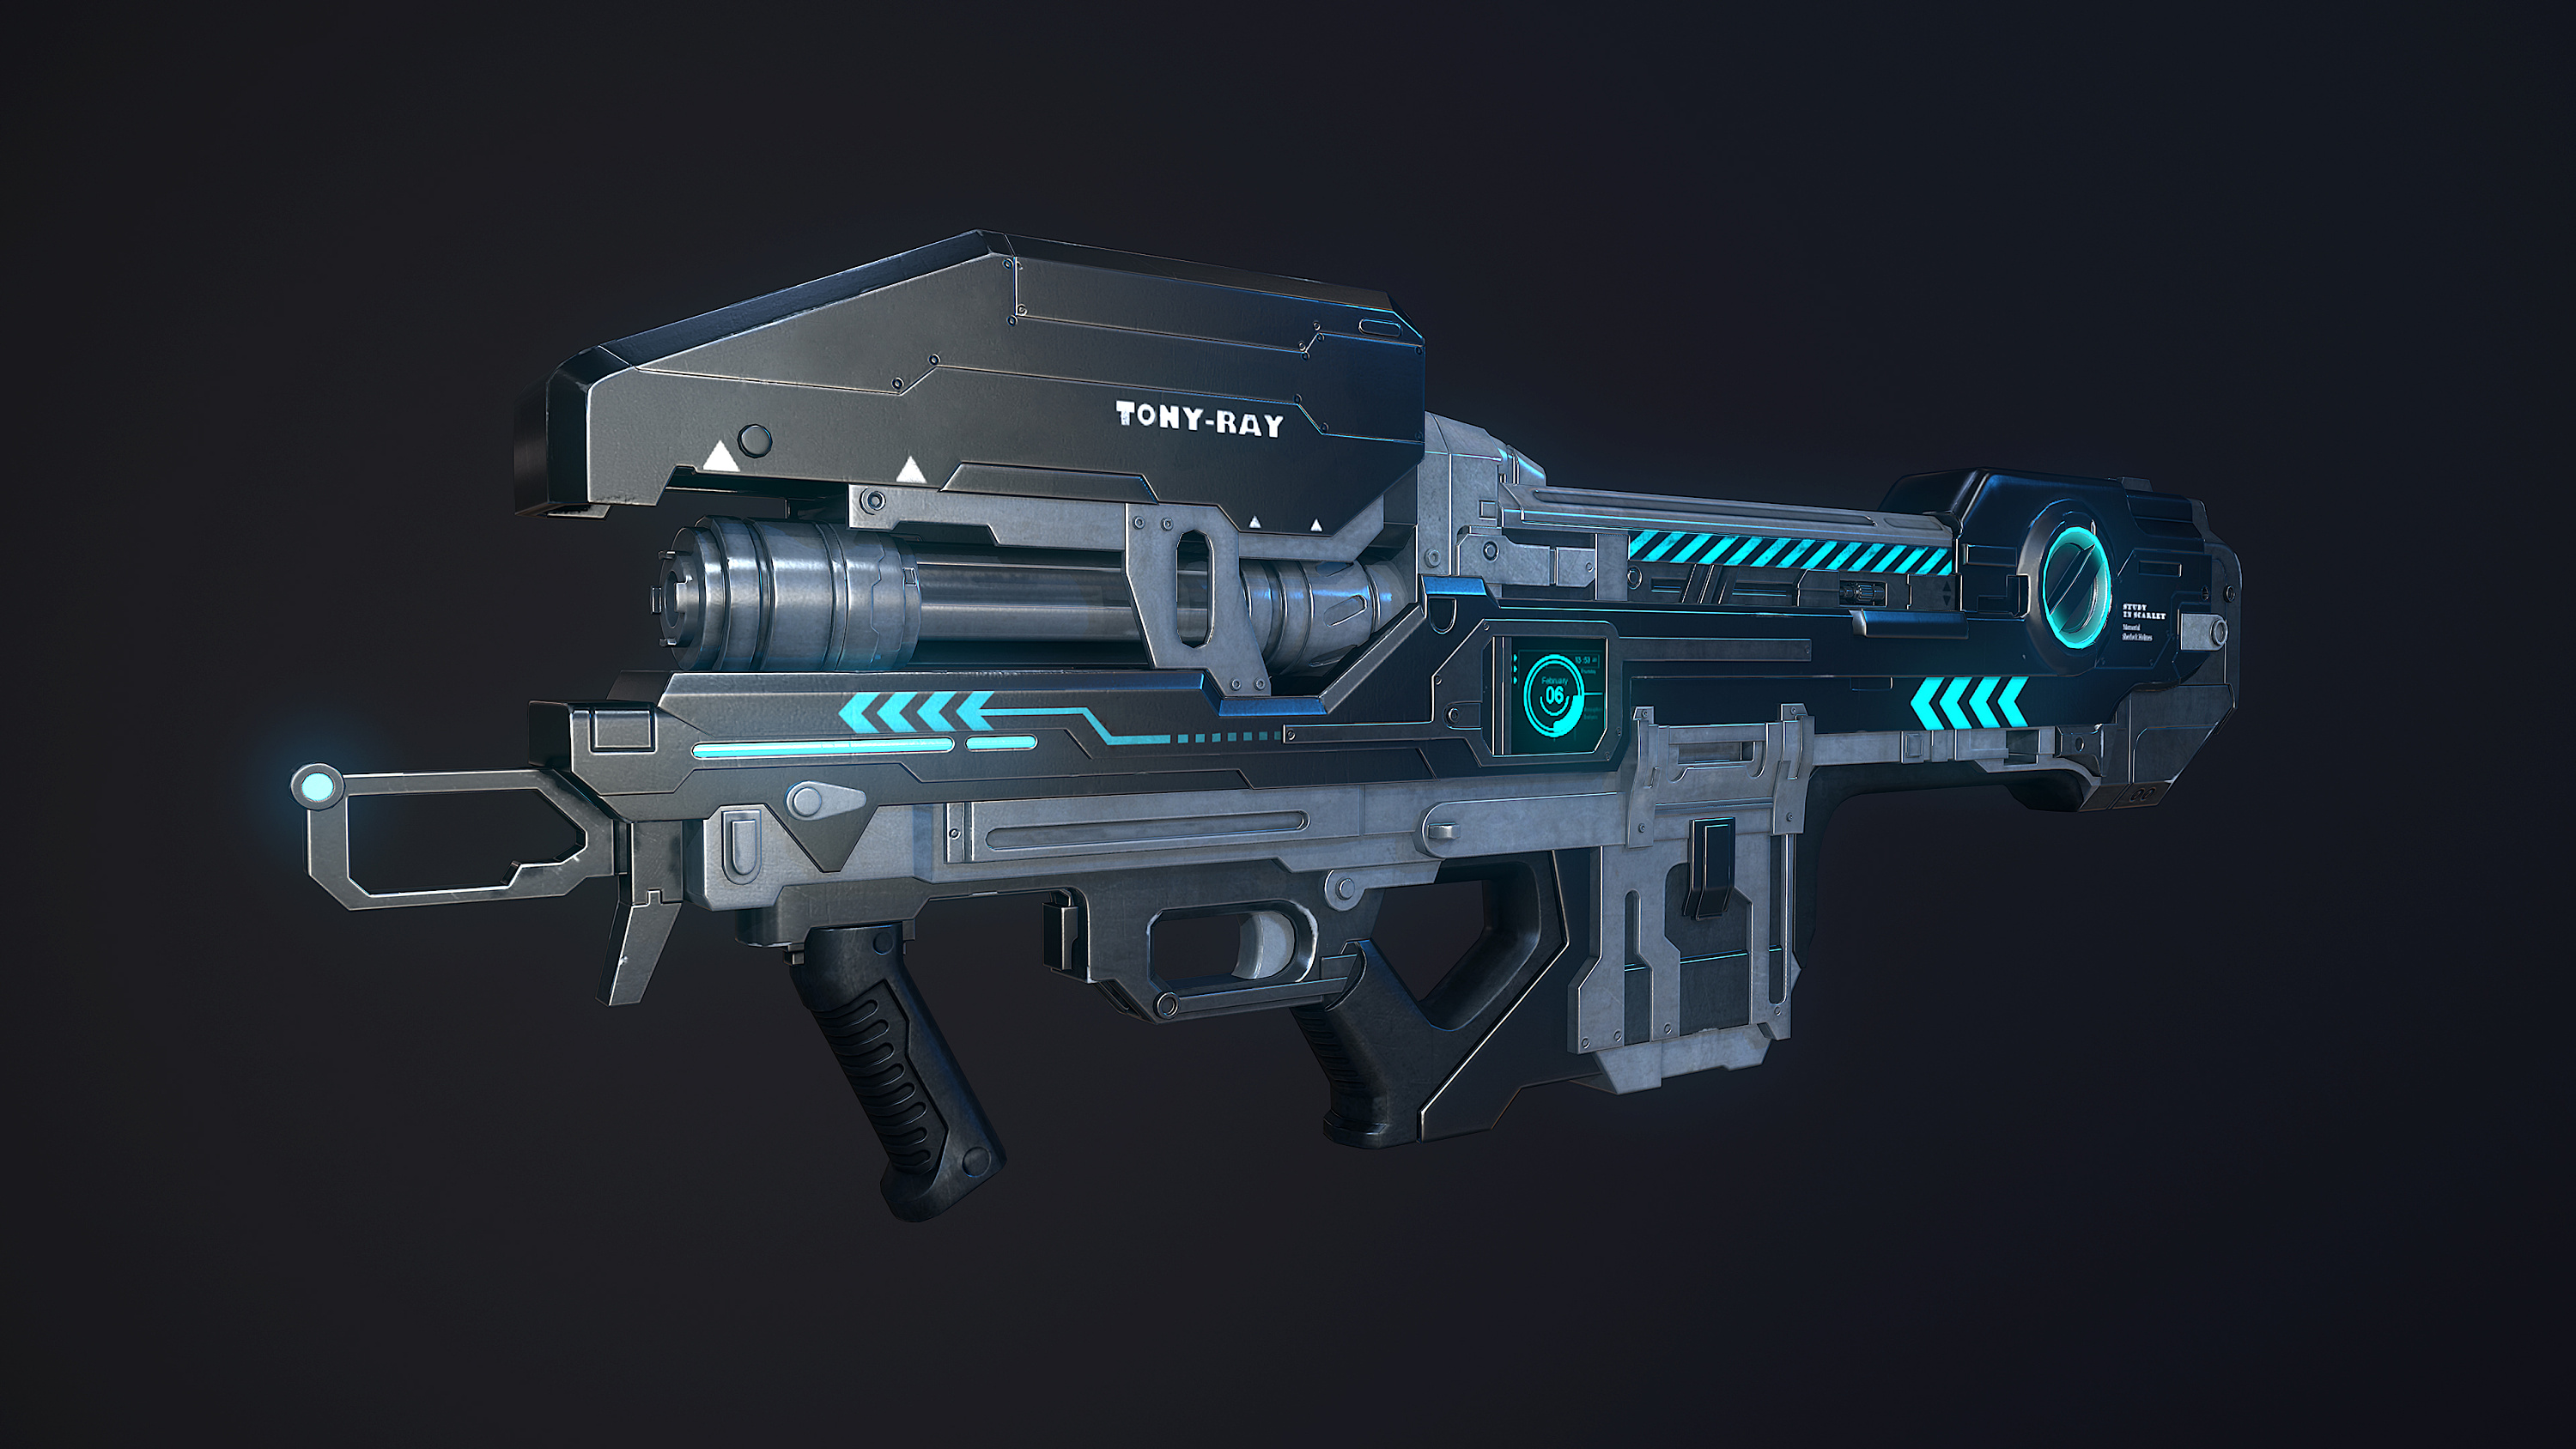 《Apex英雄》新武器“浩劫”能量枪介绍视频 有两种开火模式_3DM单机